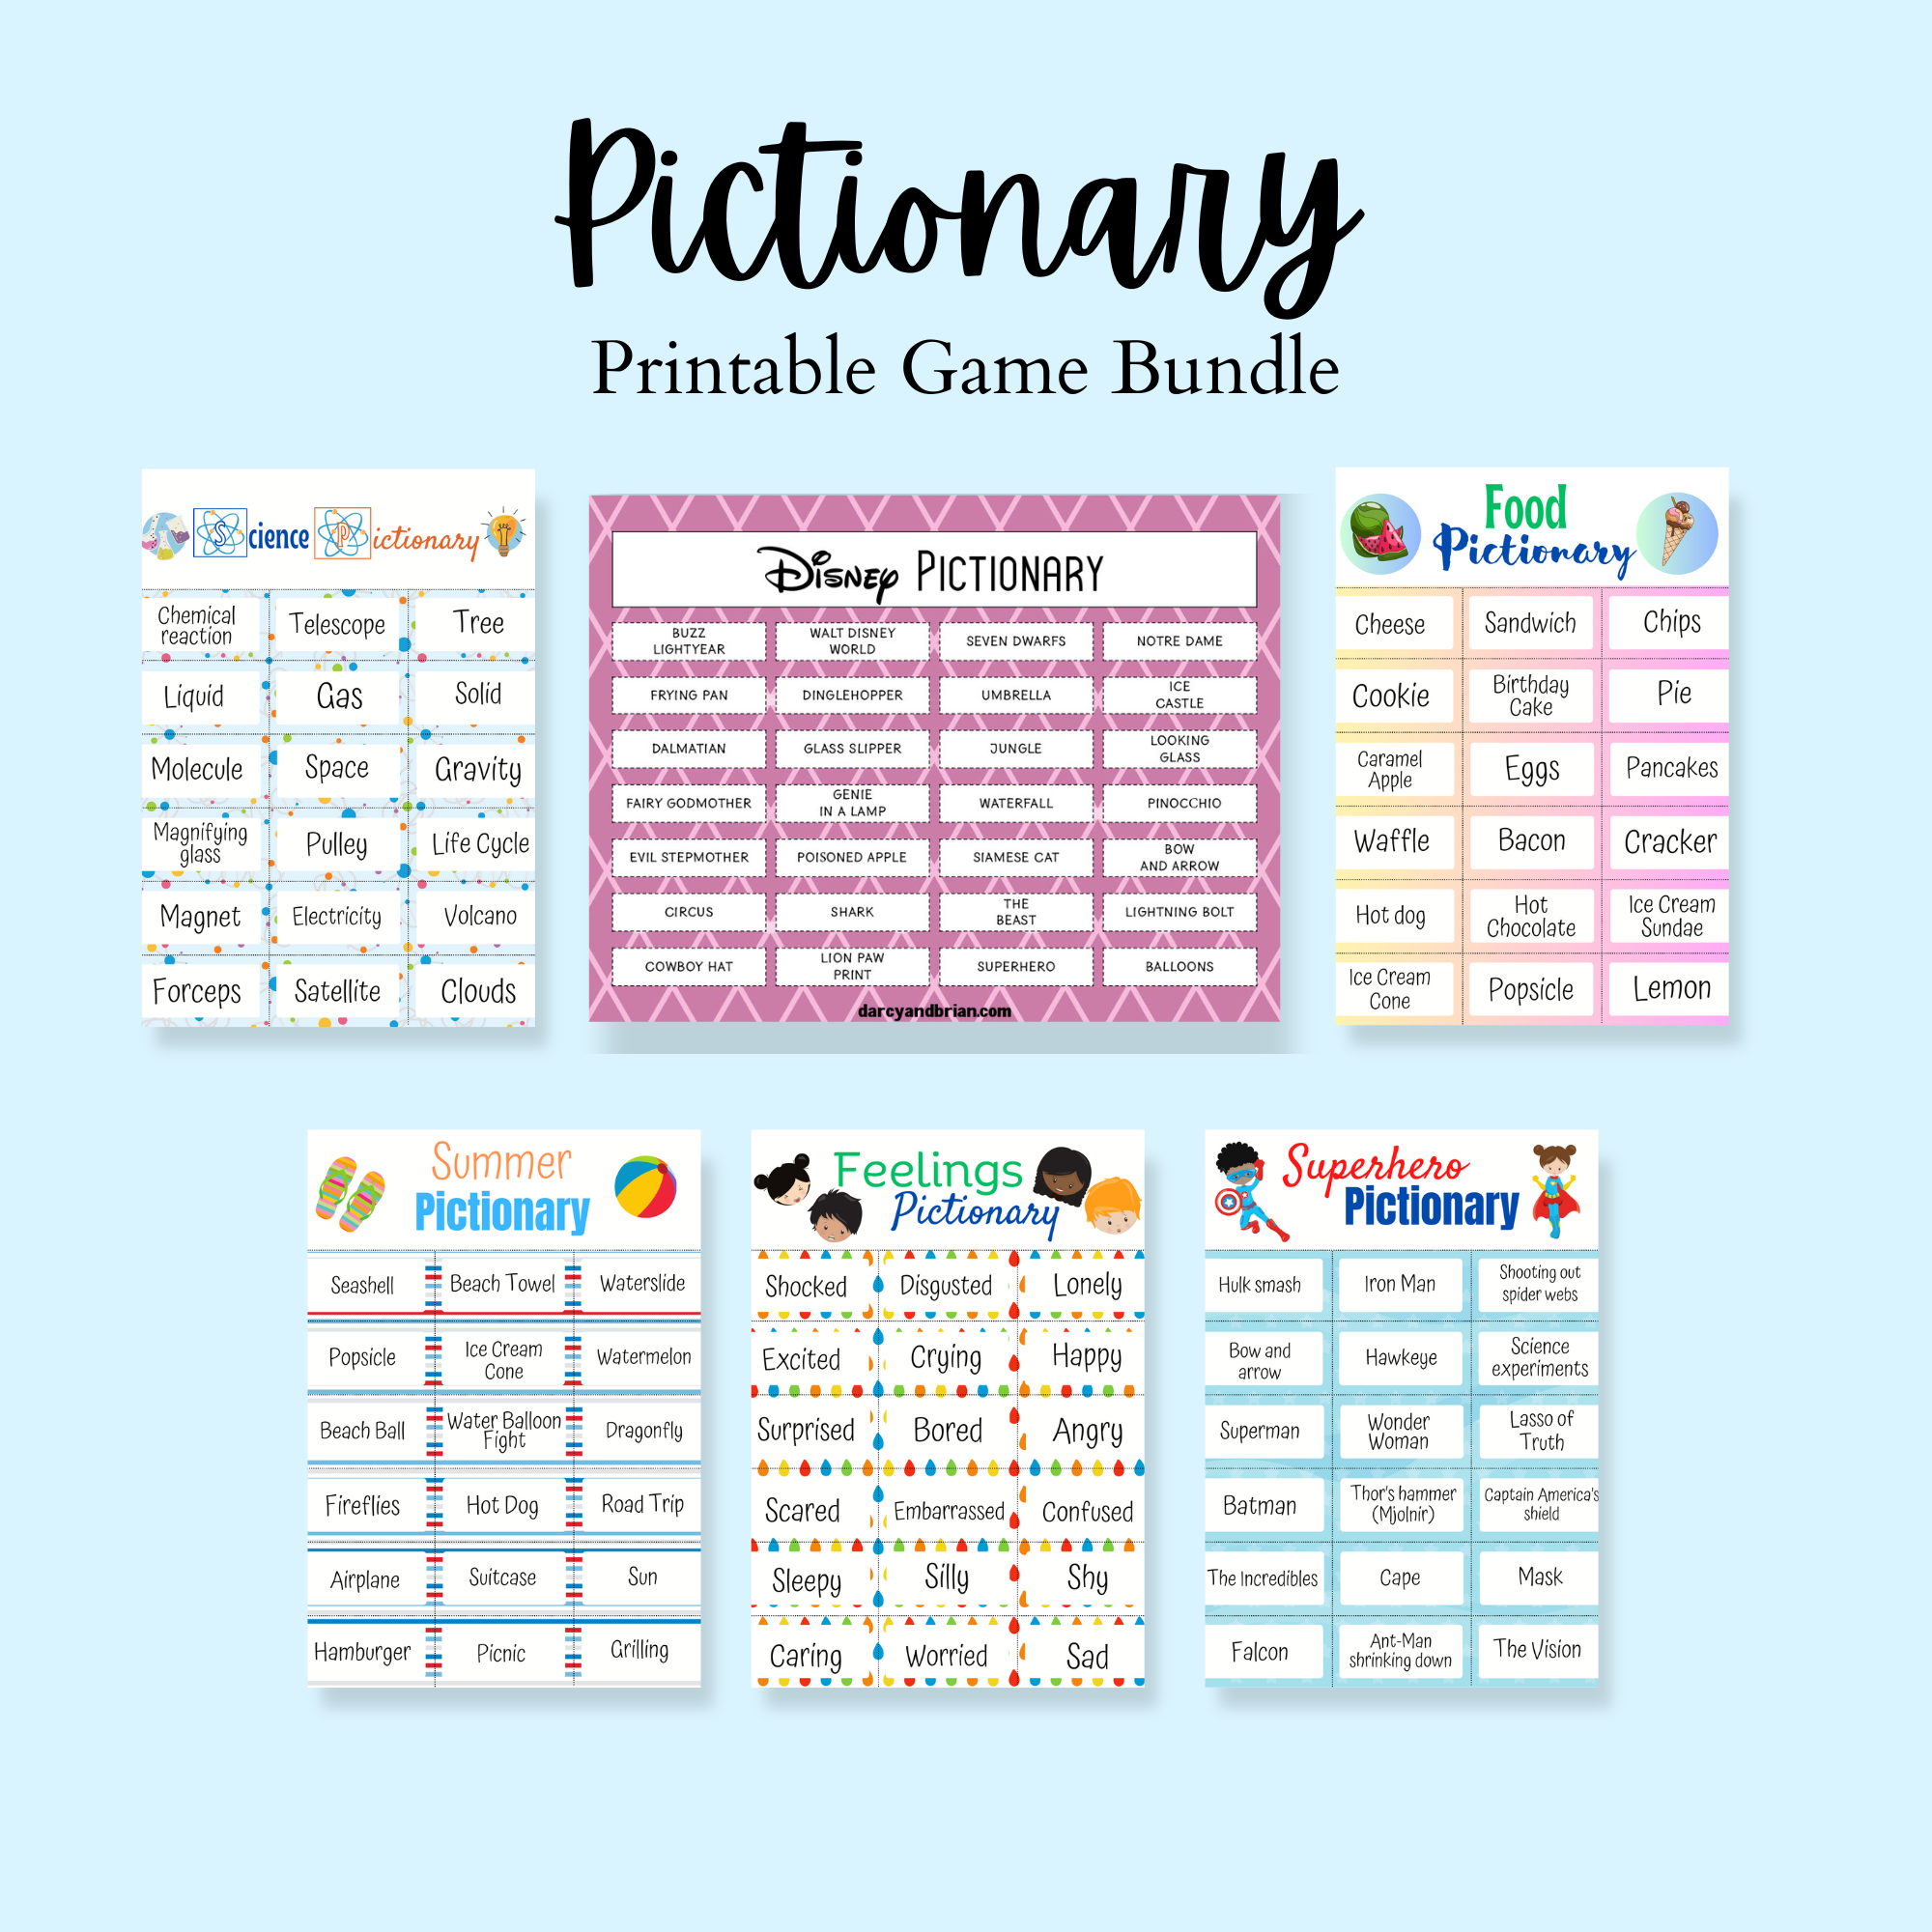 Pictionary Printable Games Bundle